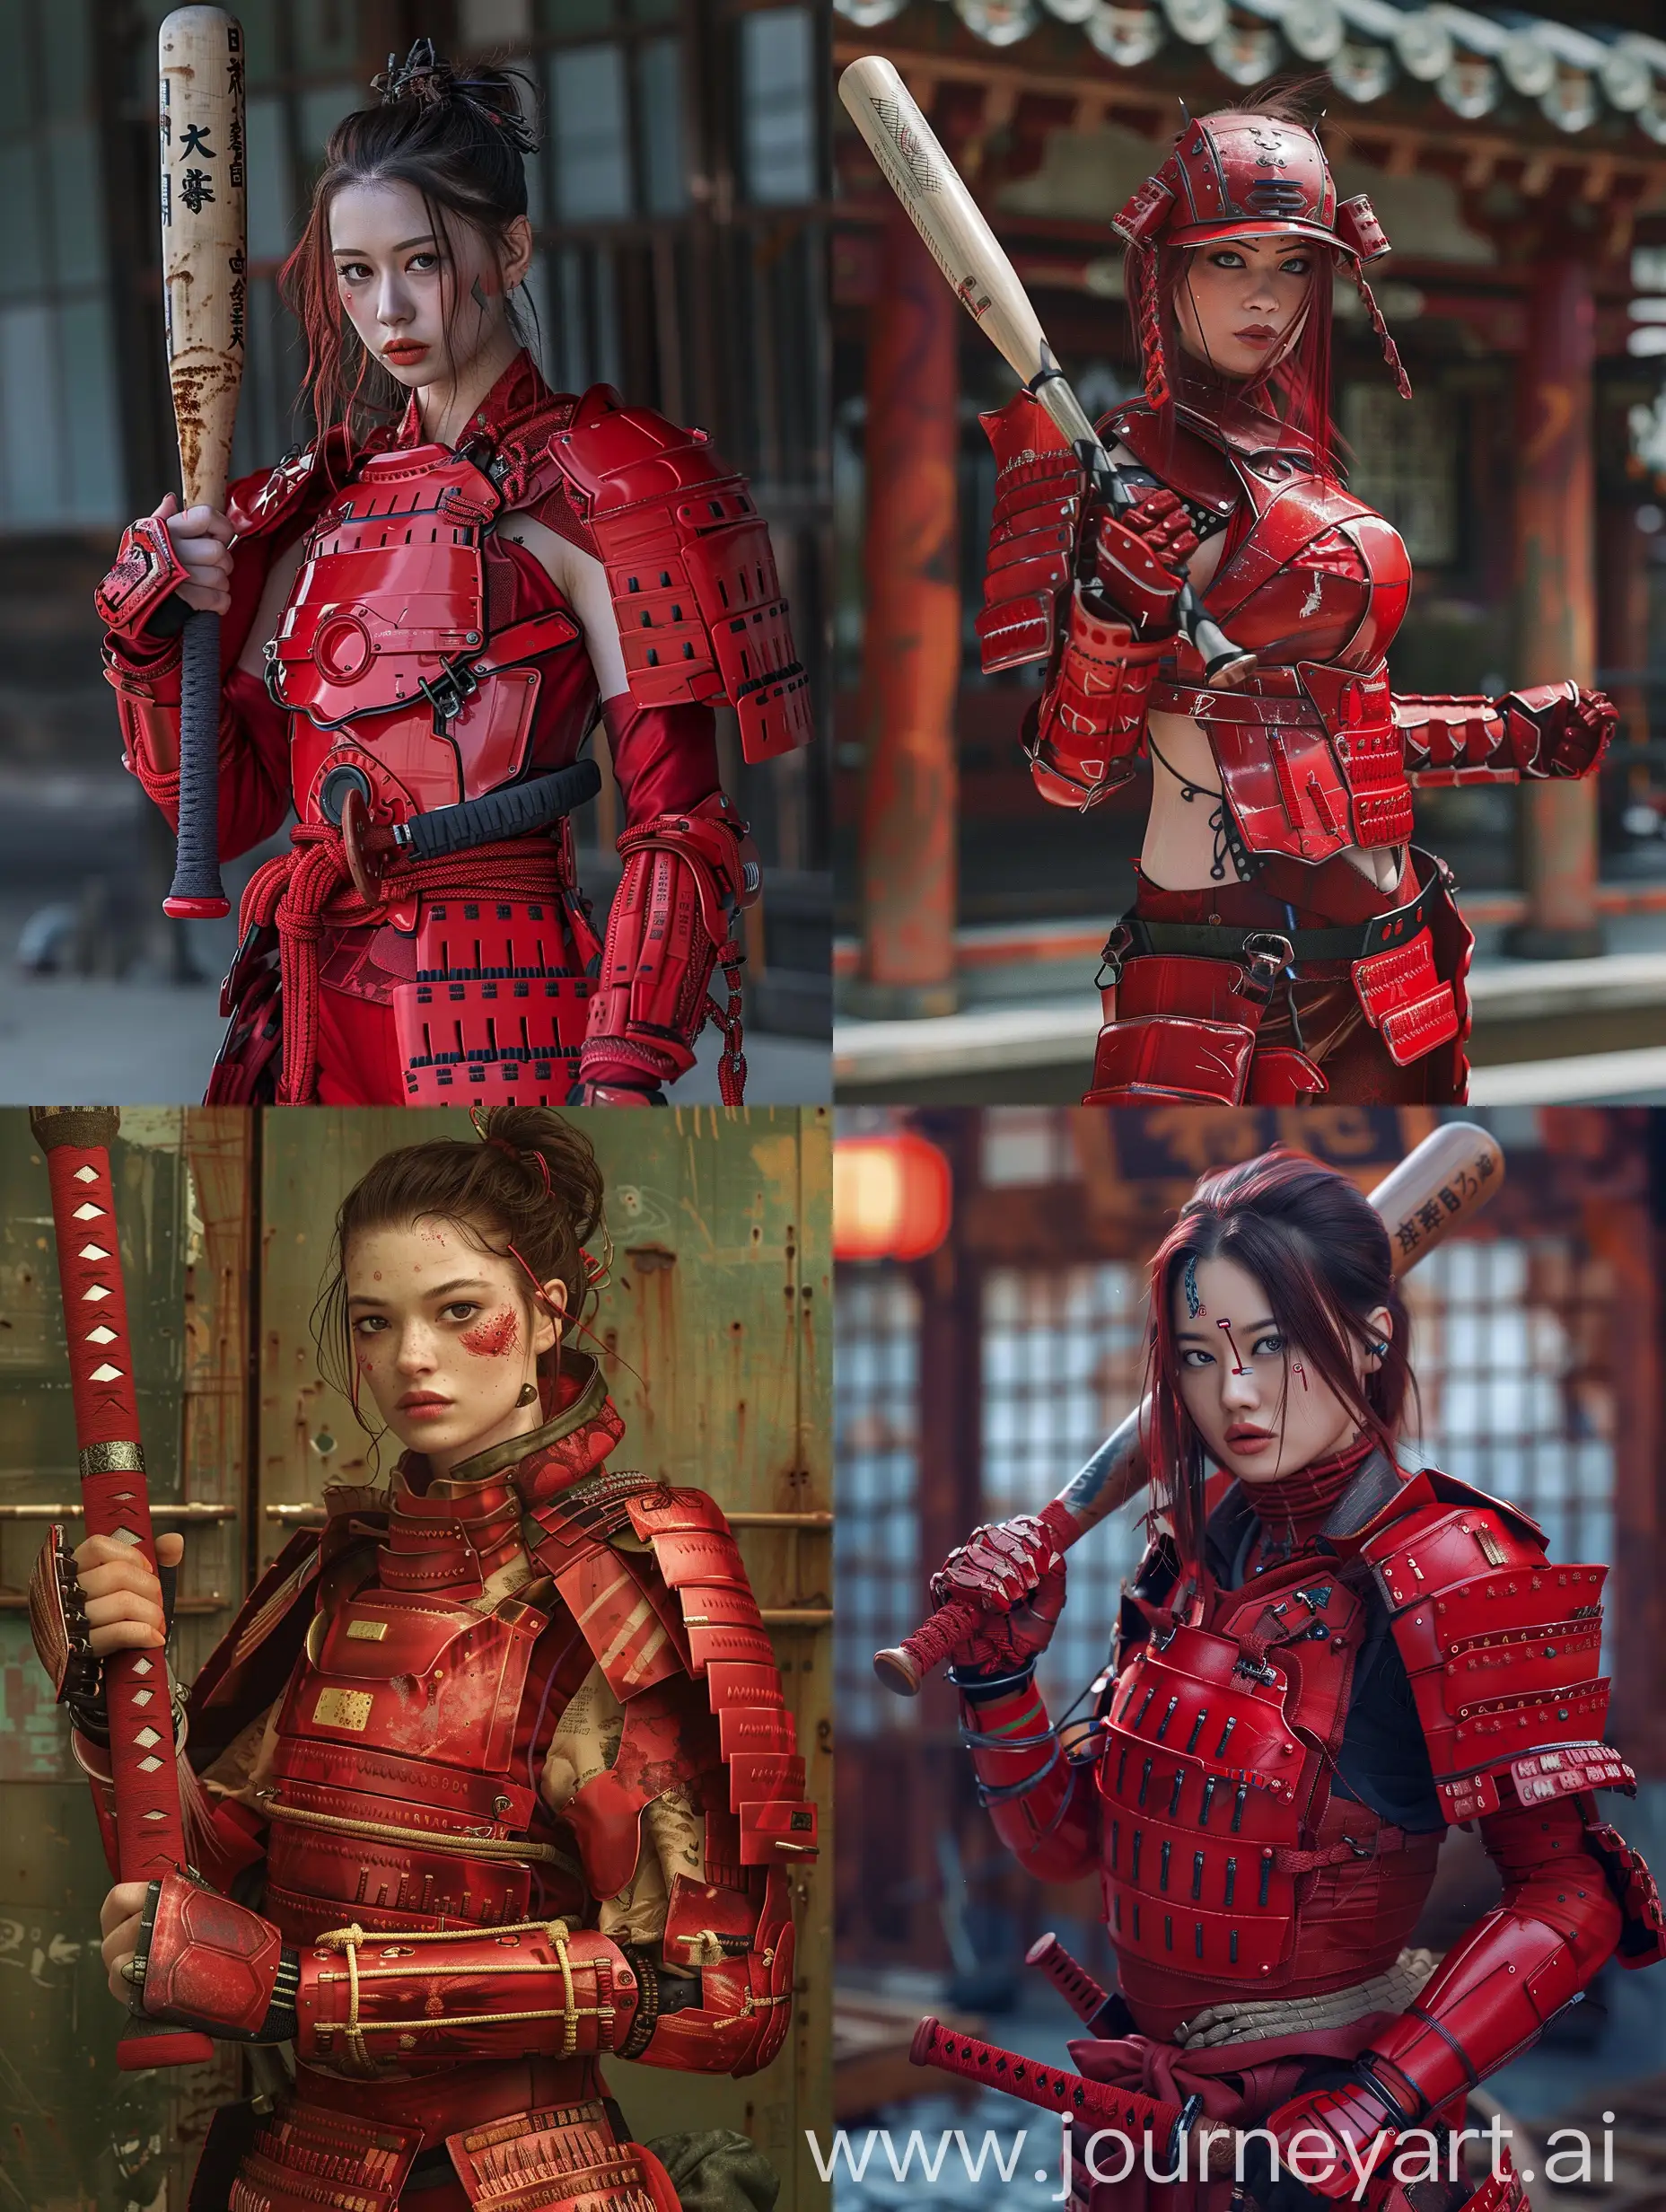 Futuristic-Cyberpunk-Samurai-Woman-in-Red-Armor-Wielding-Baseball-Bat